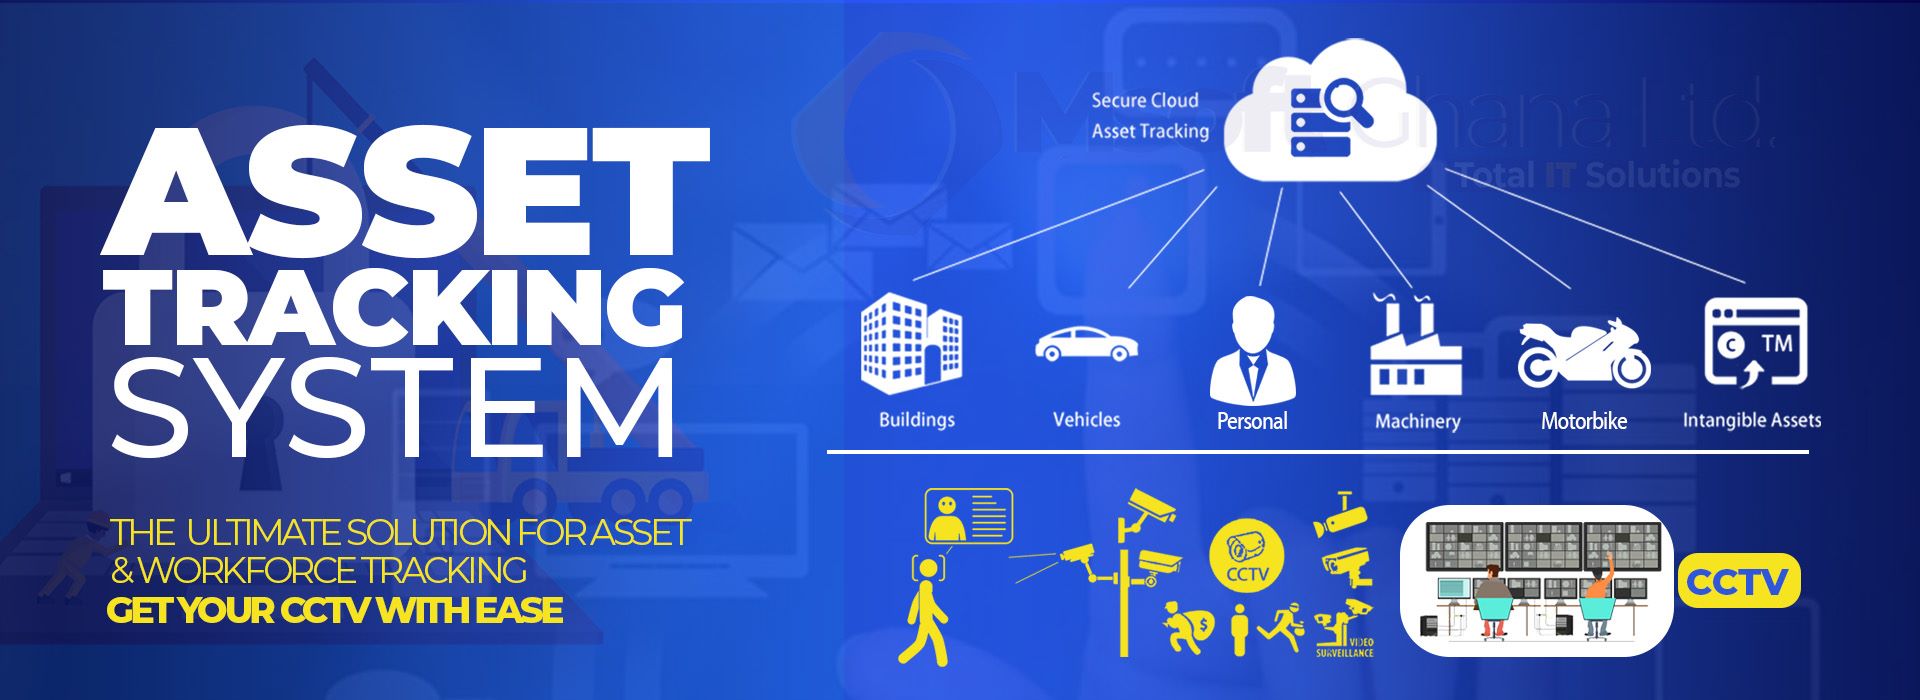 Msoft Asset Tracking Banner